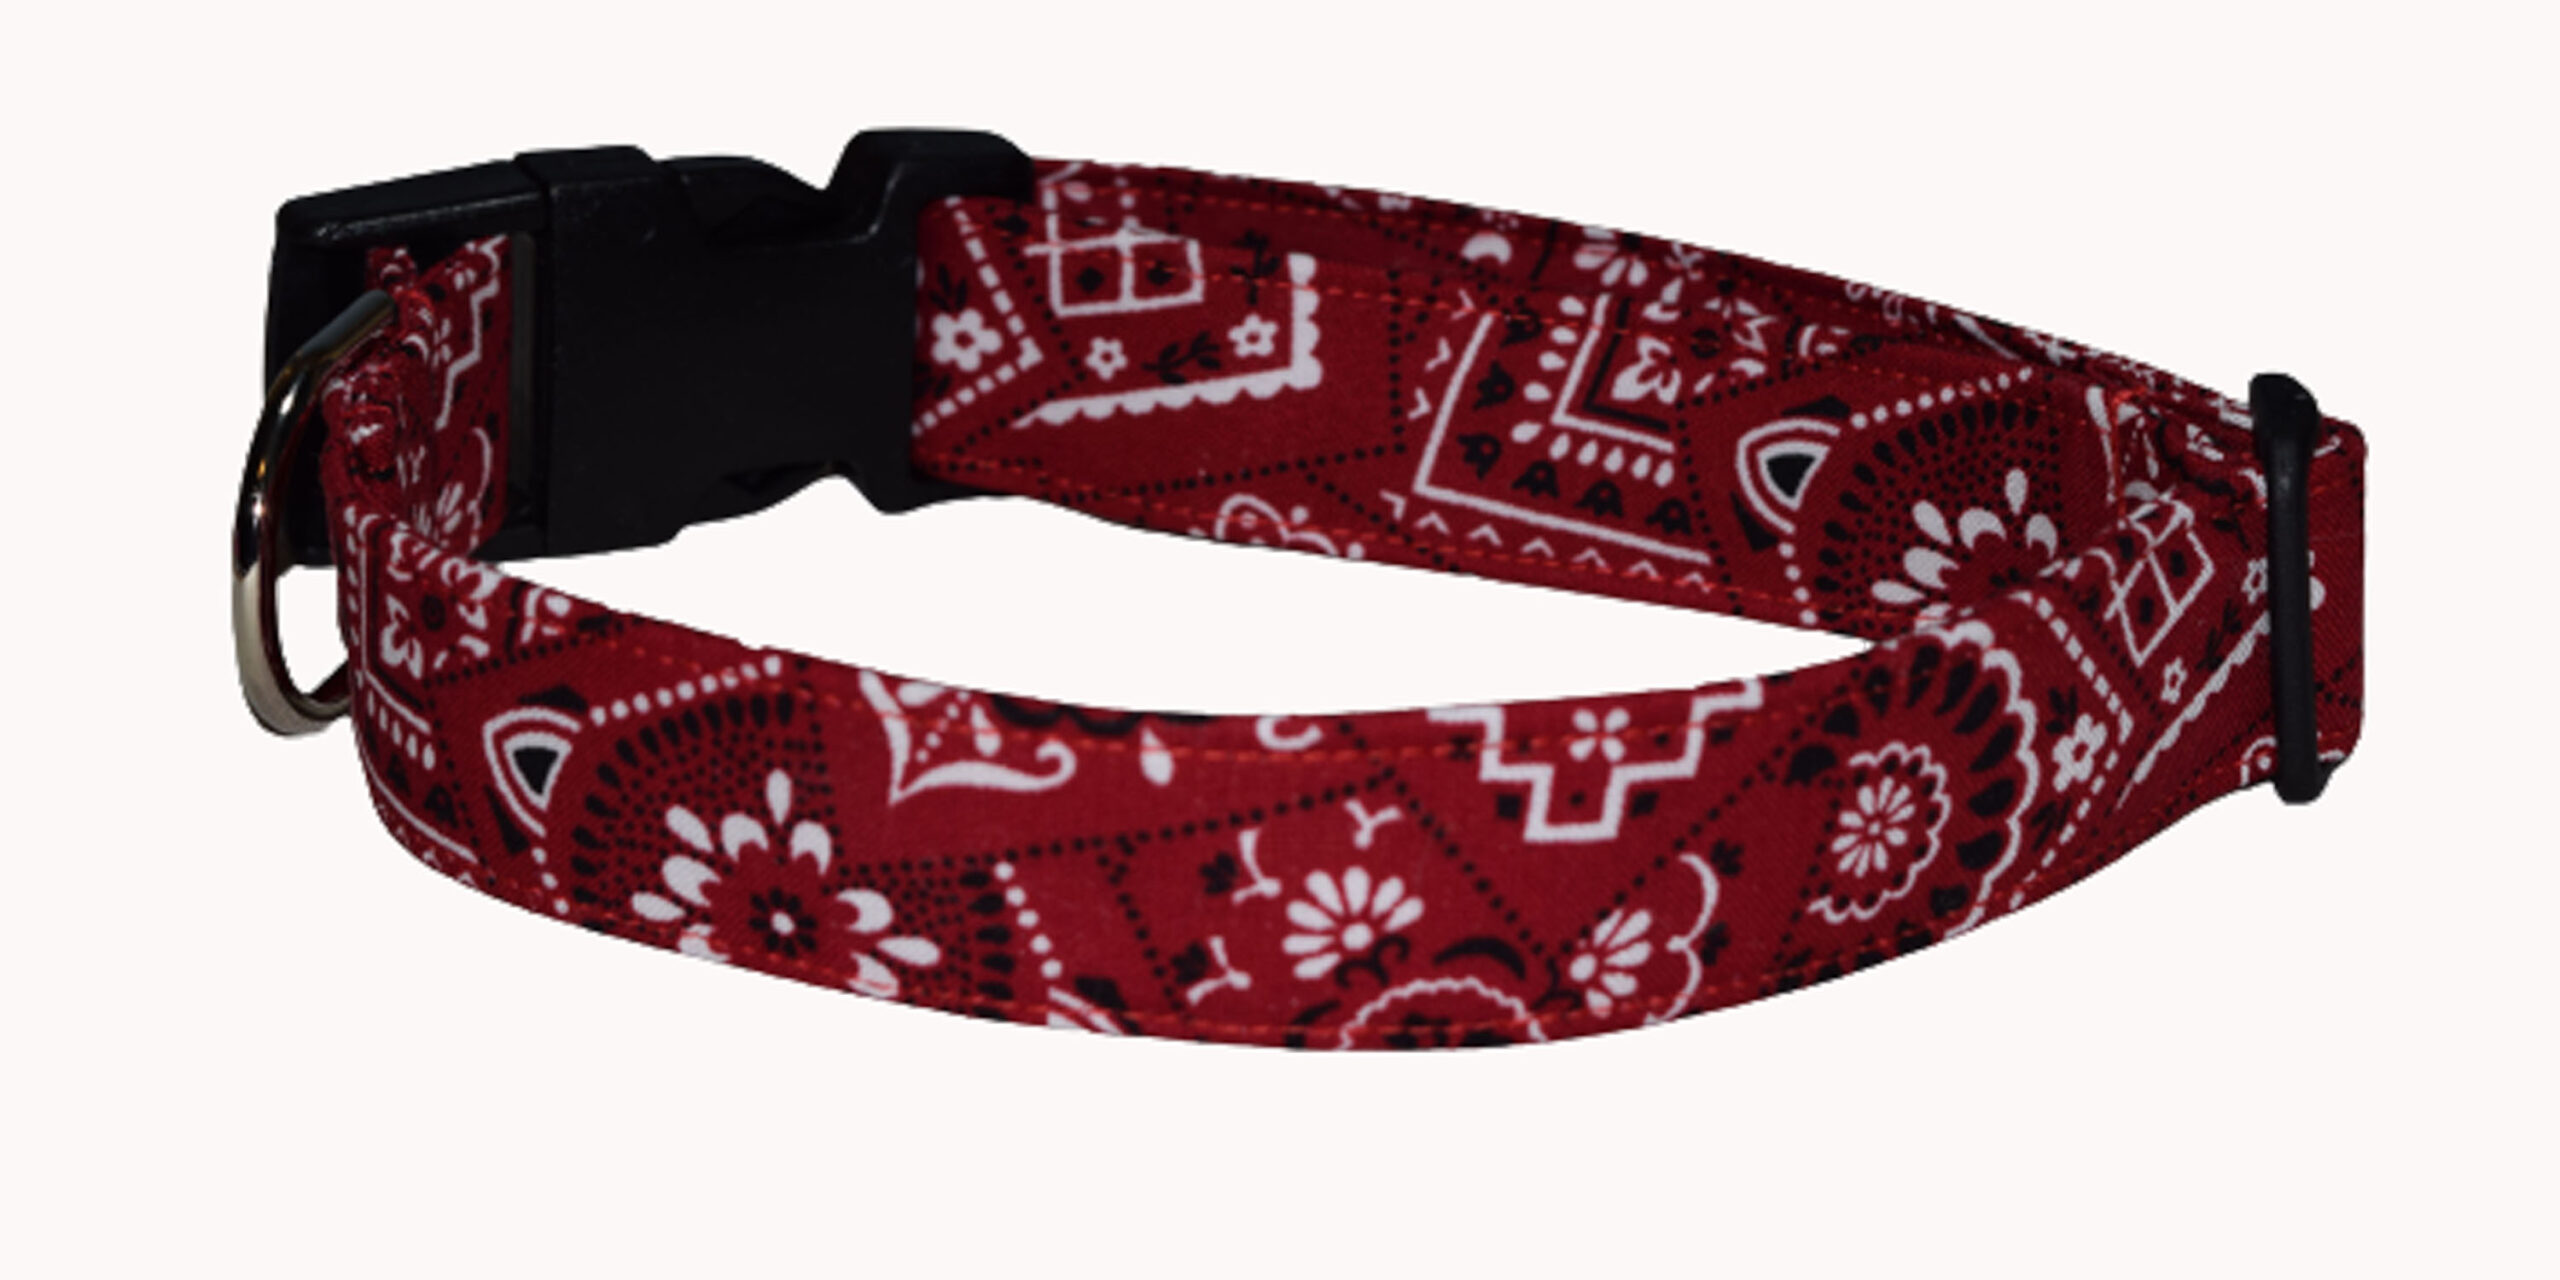 Bandana Red Wholesale Dog and Cat Collars